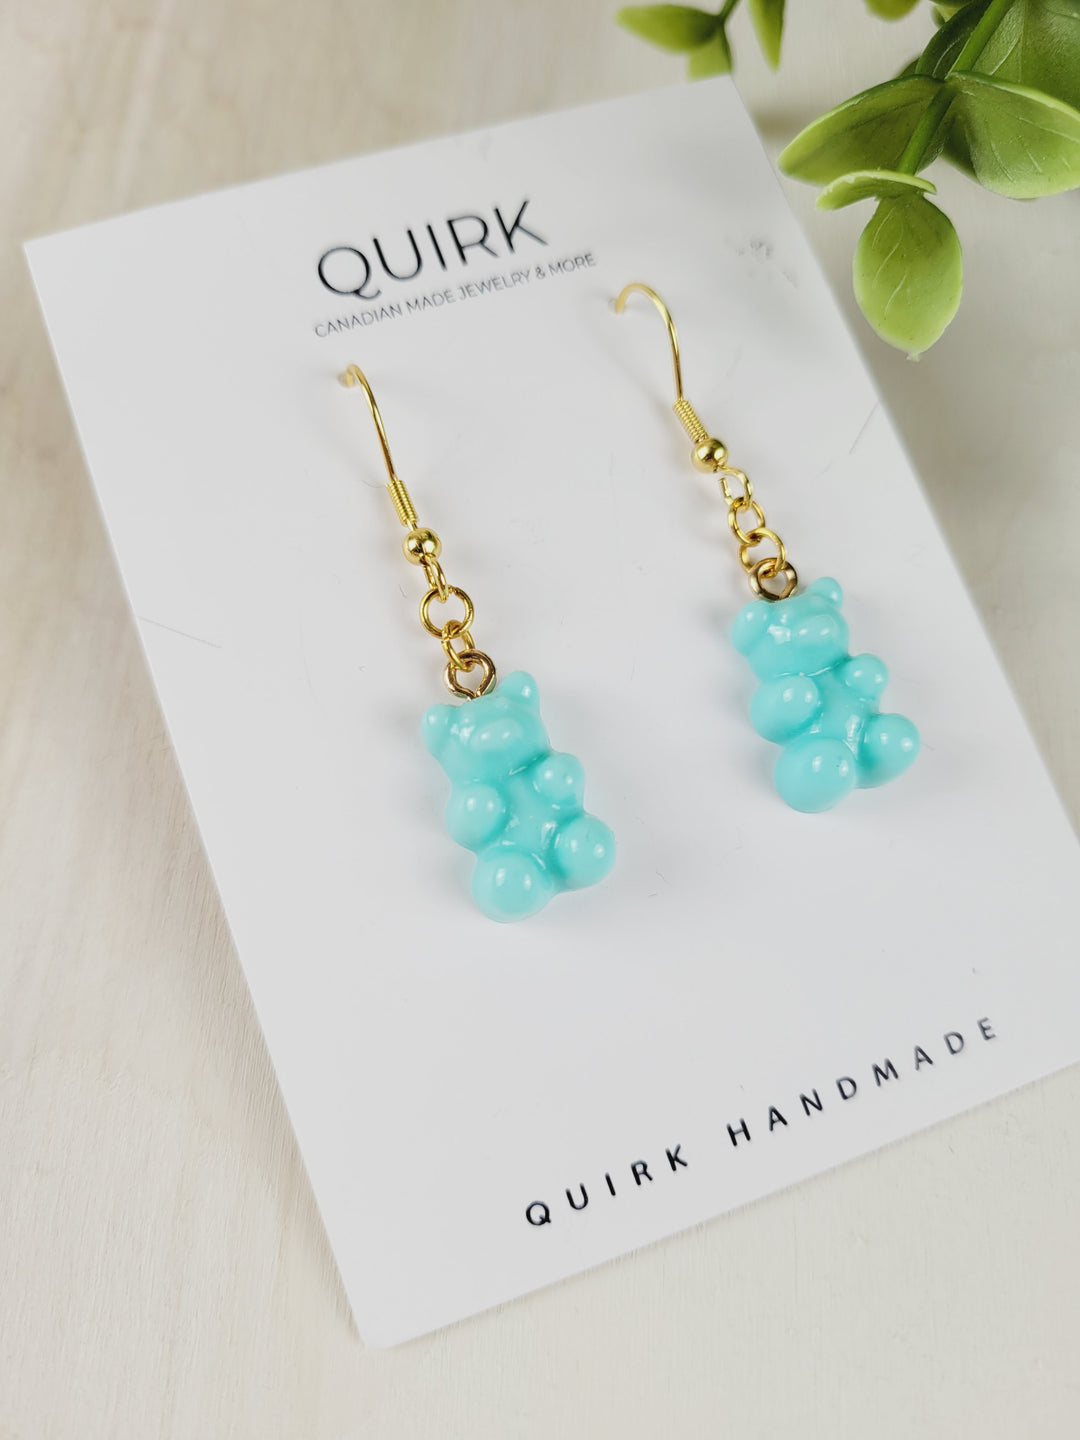 Quirk Handmade Jewelry, Stainless Steel Dangling Earrings